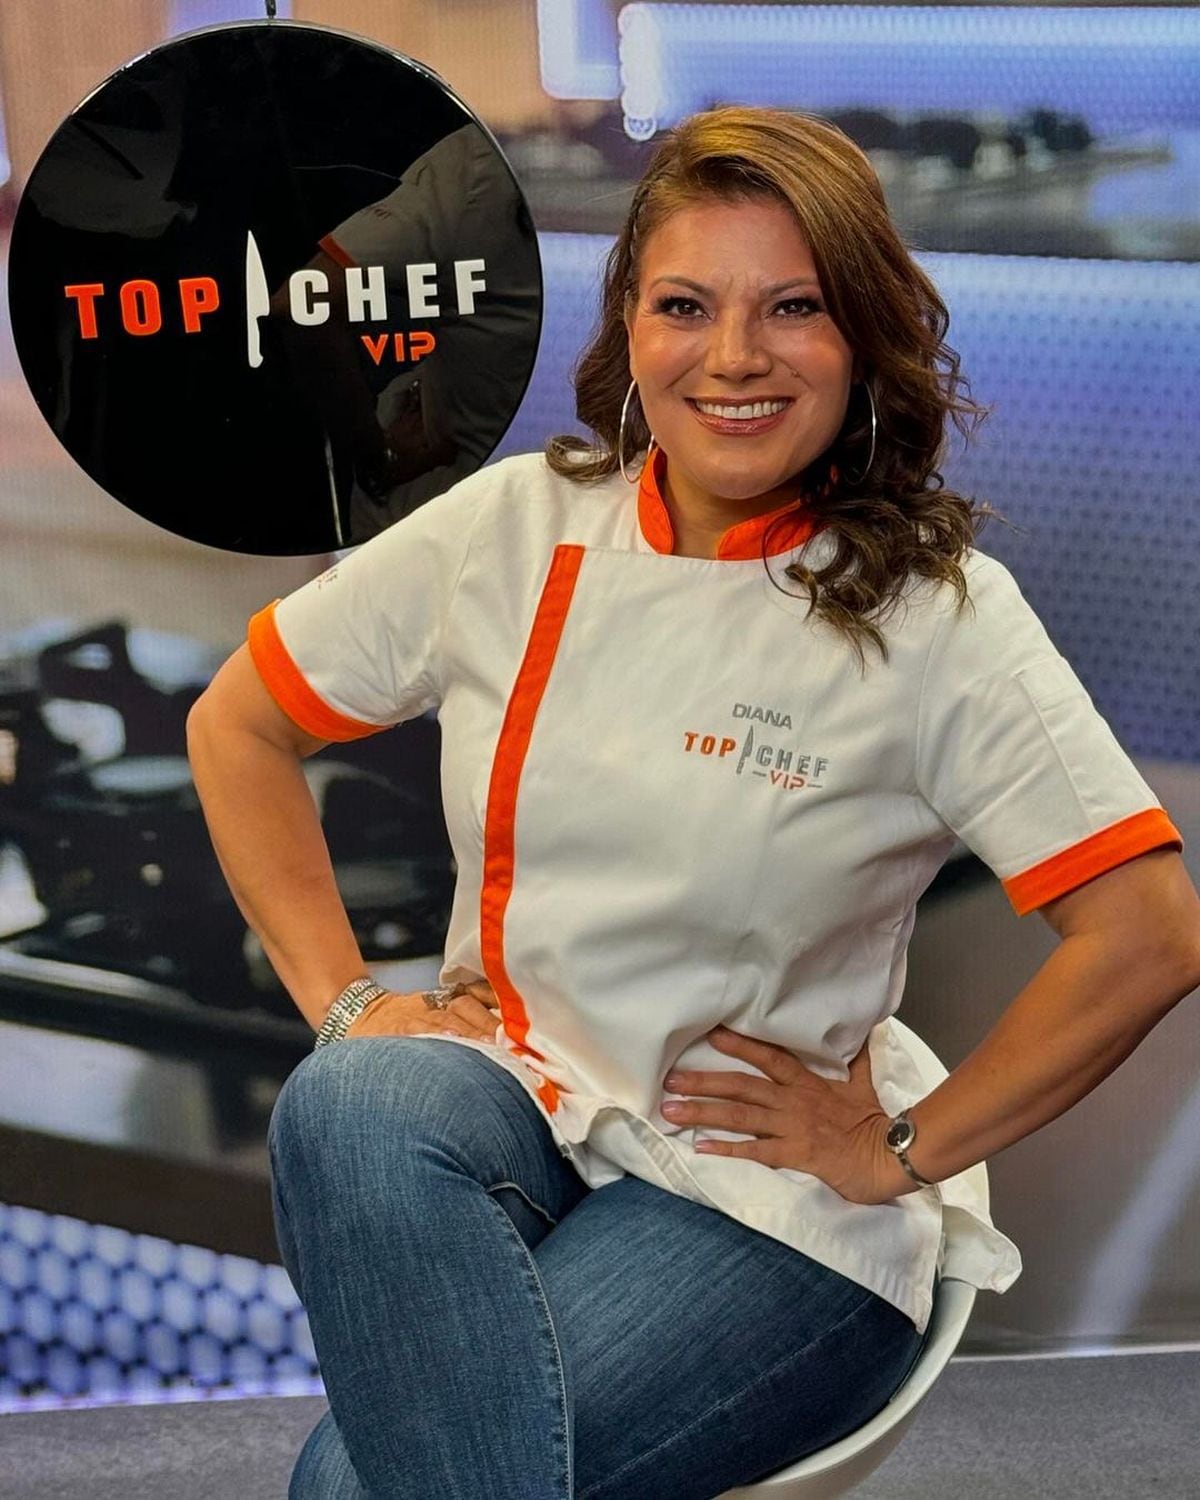 Diana Reyes está lista para "Top Chef VIP 3" (Foto: Telemundo)